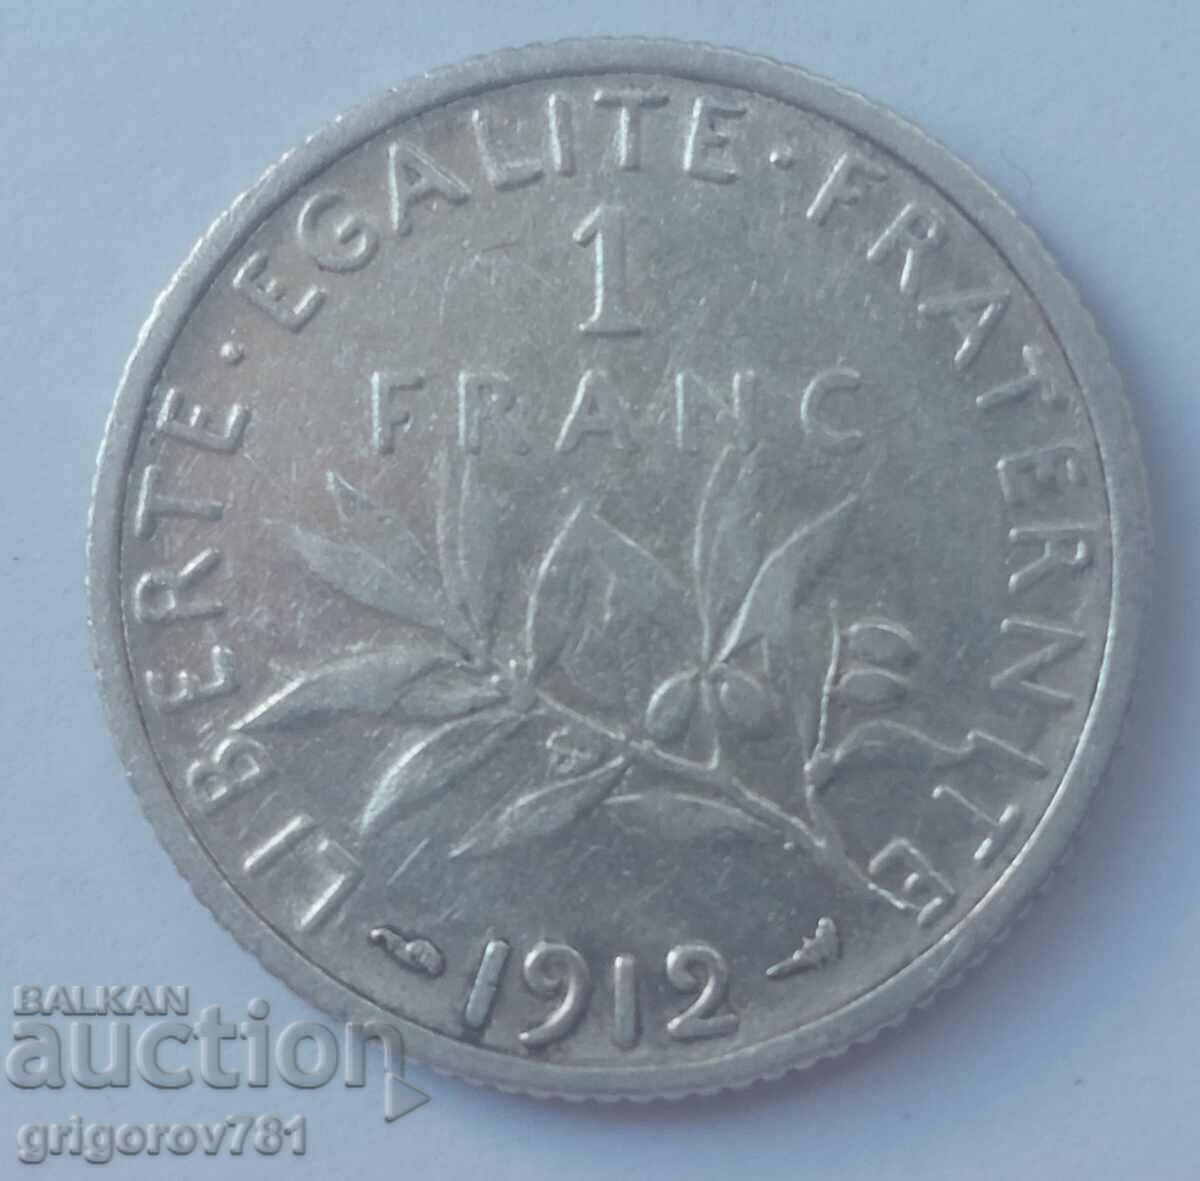 1 franc silver France 1912 - silver coin №29